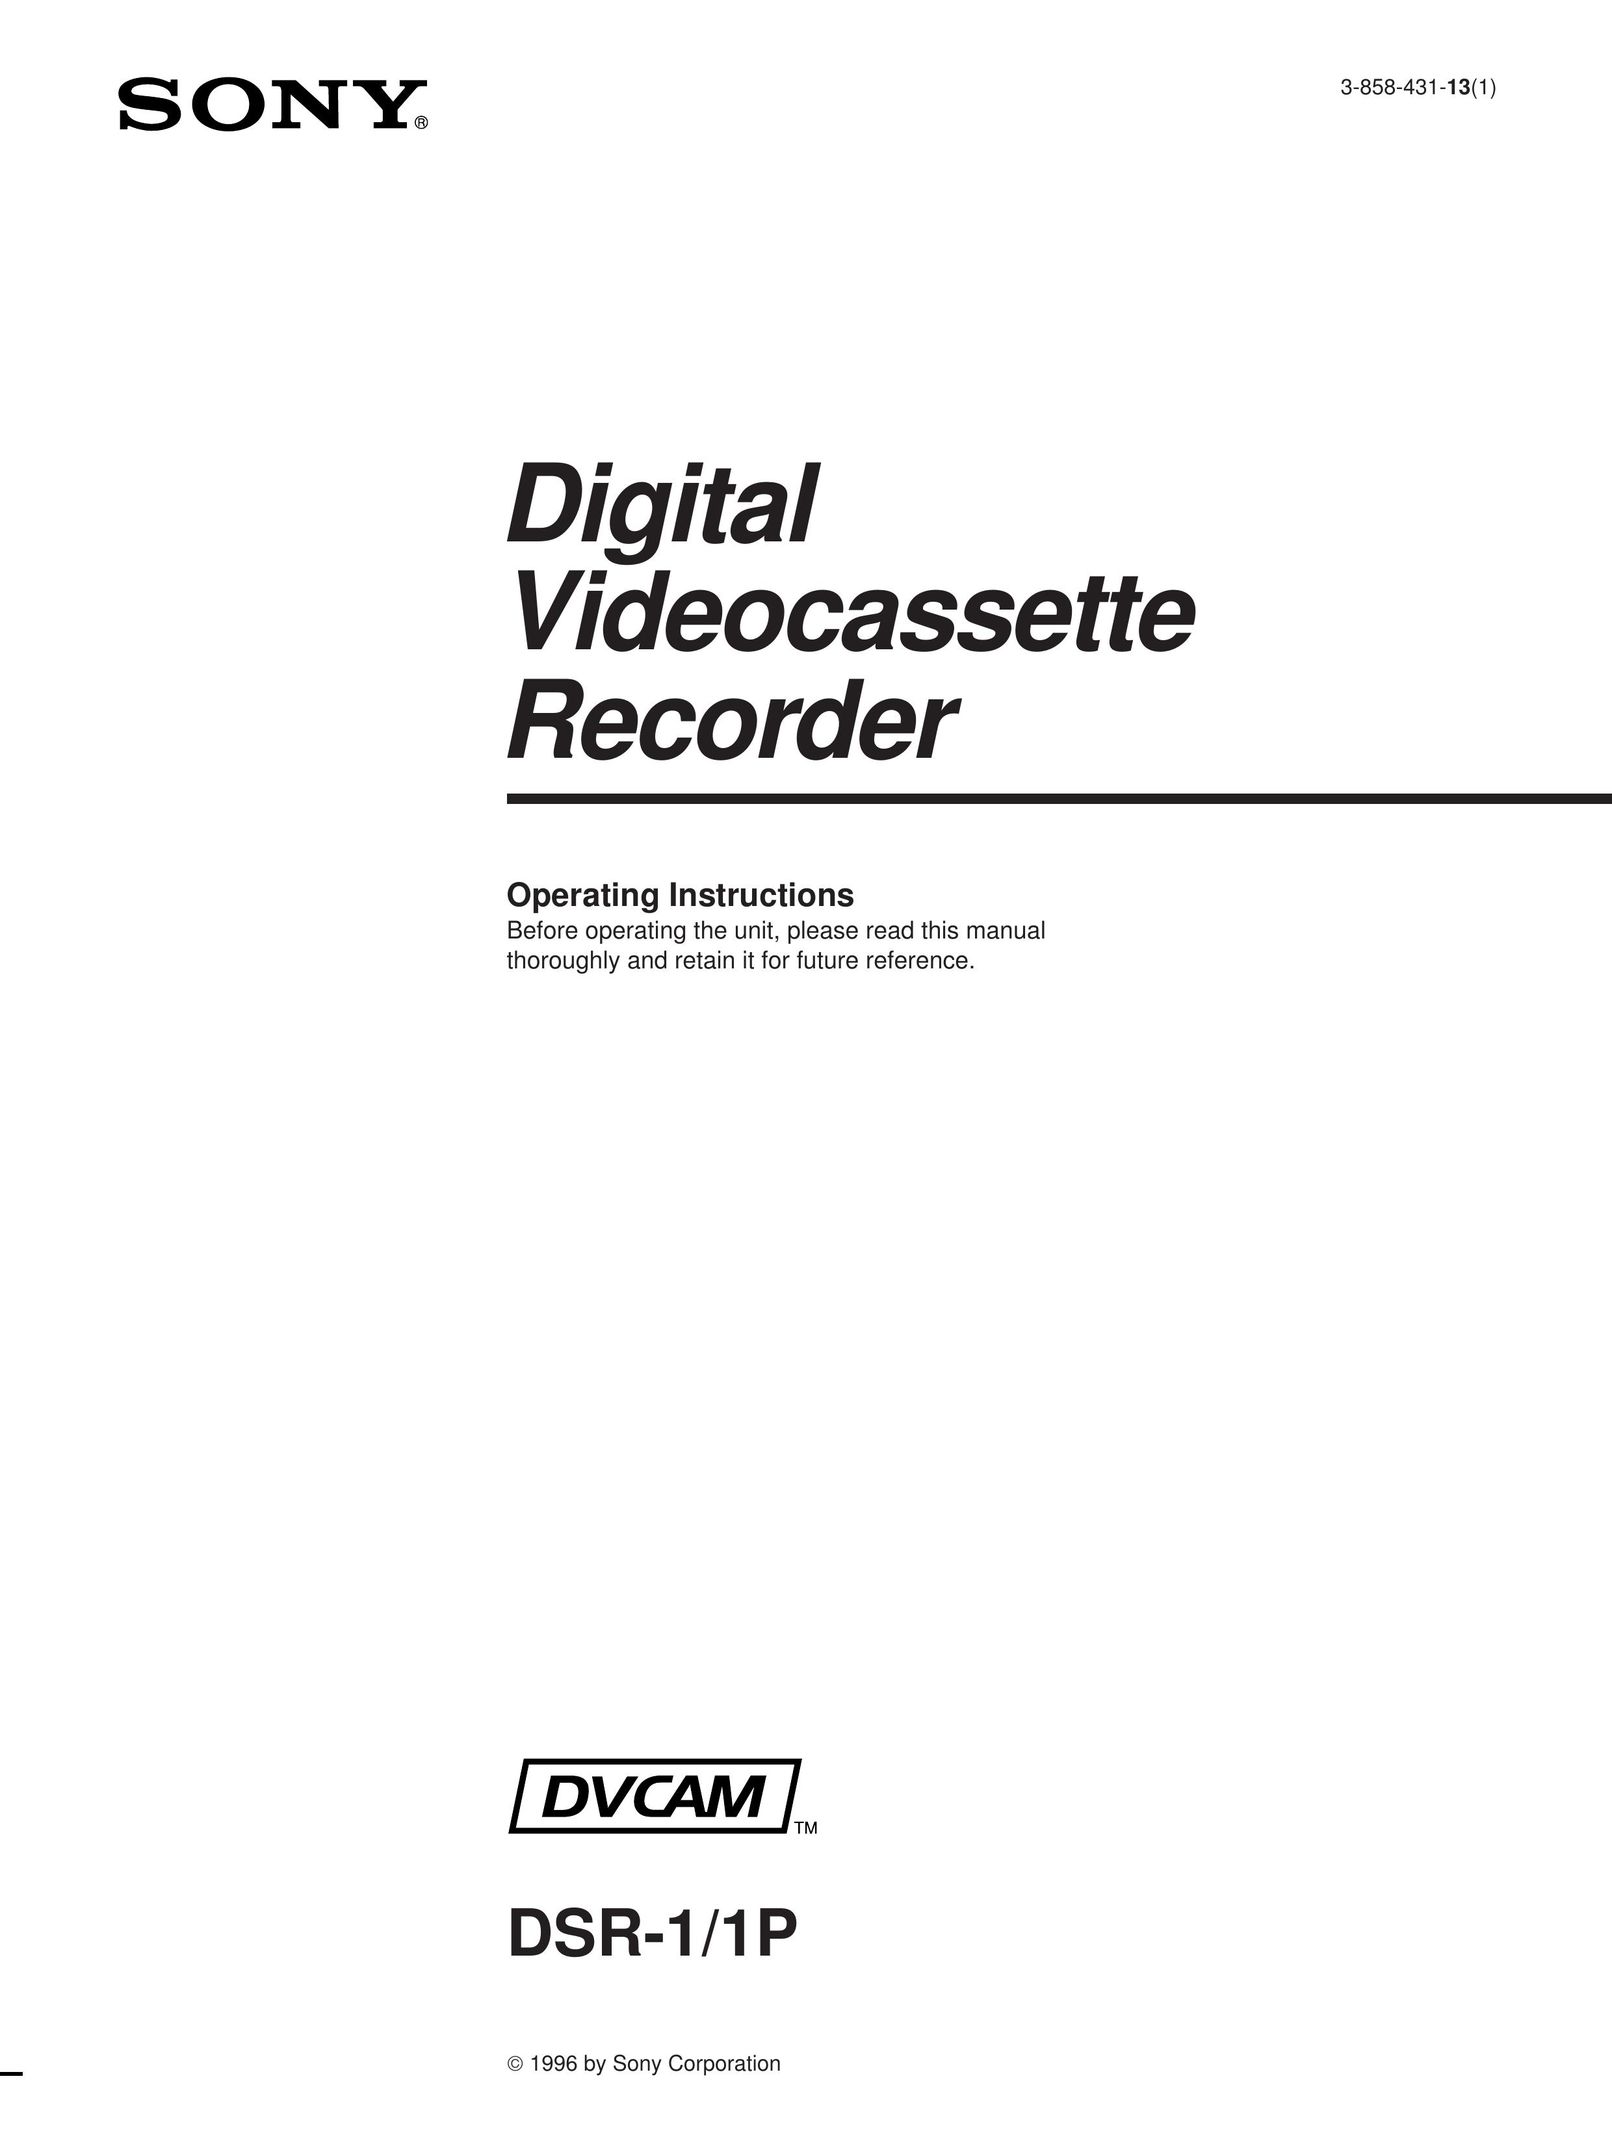 Samsung DSR-1/1P VCR User Manual